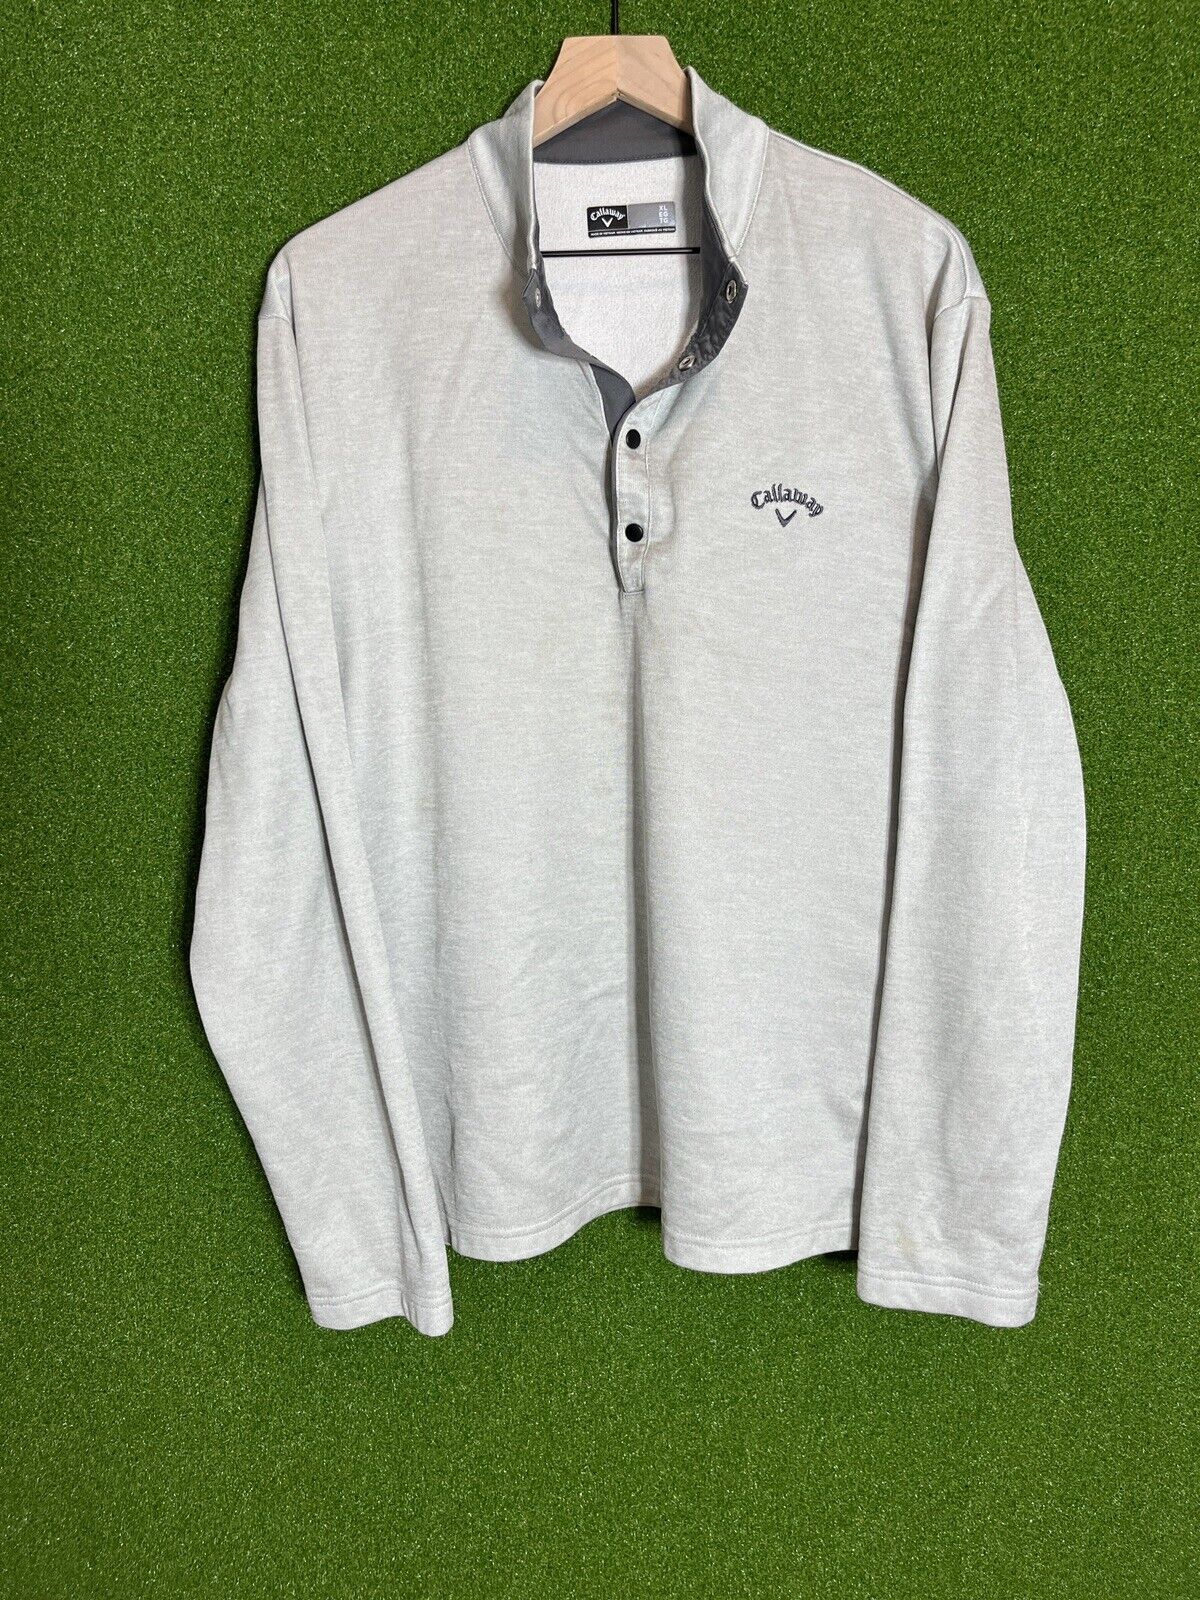 Callaway 1/4 snap pullover Golf attire Size XL Gray